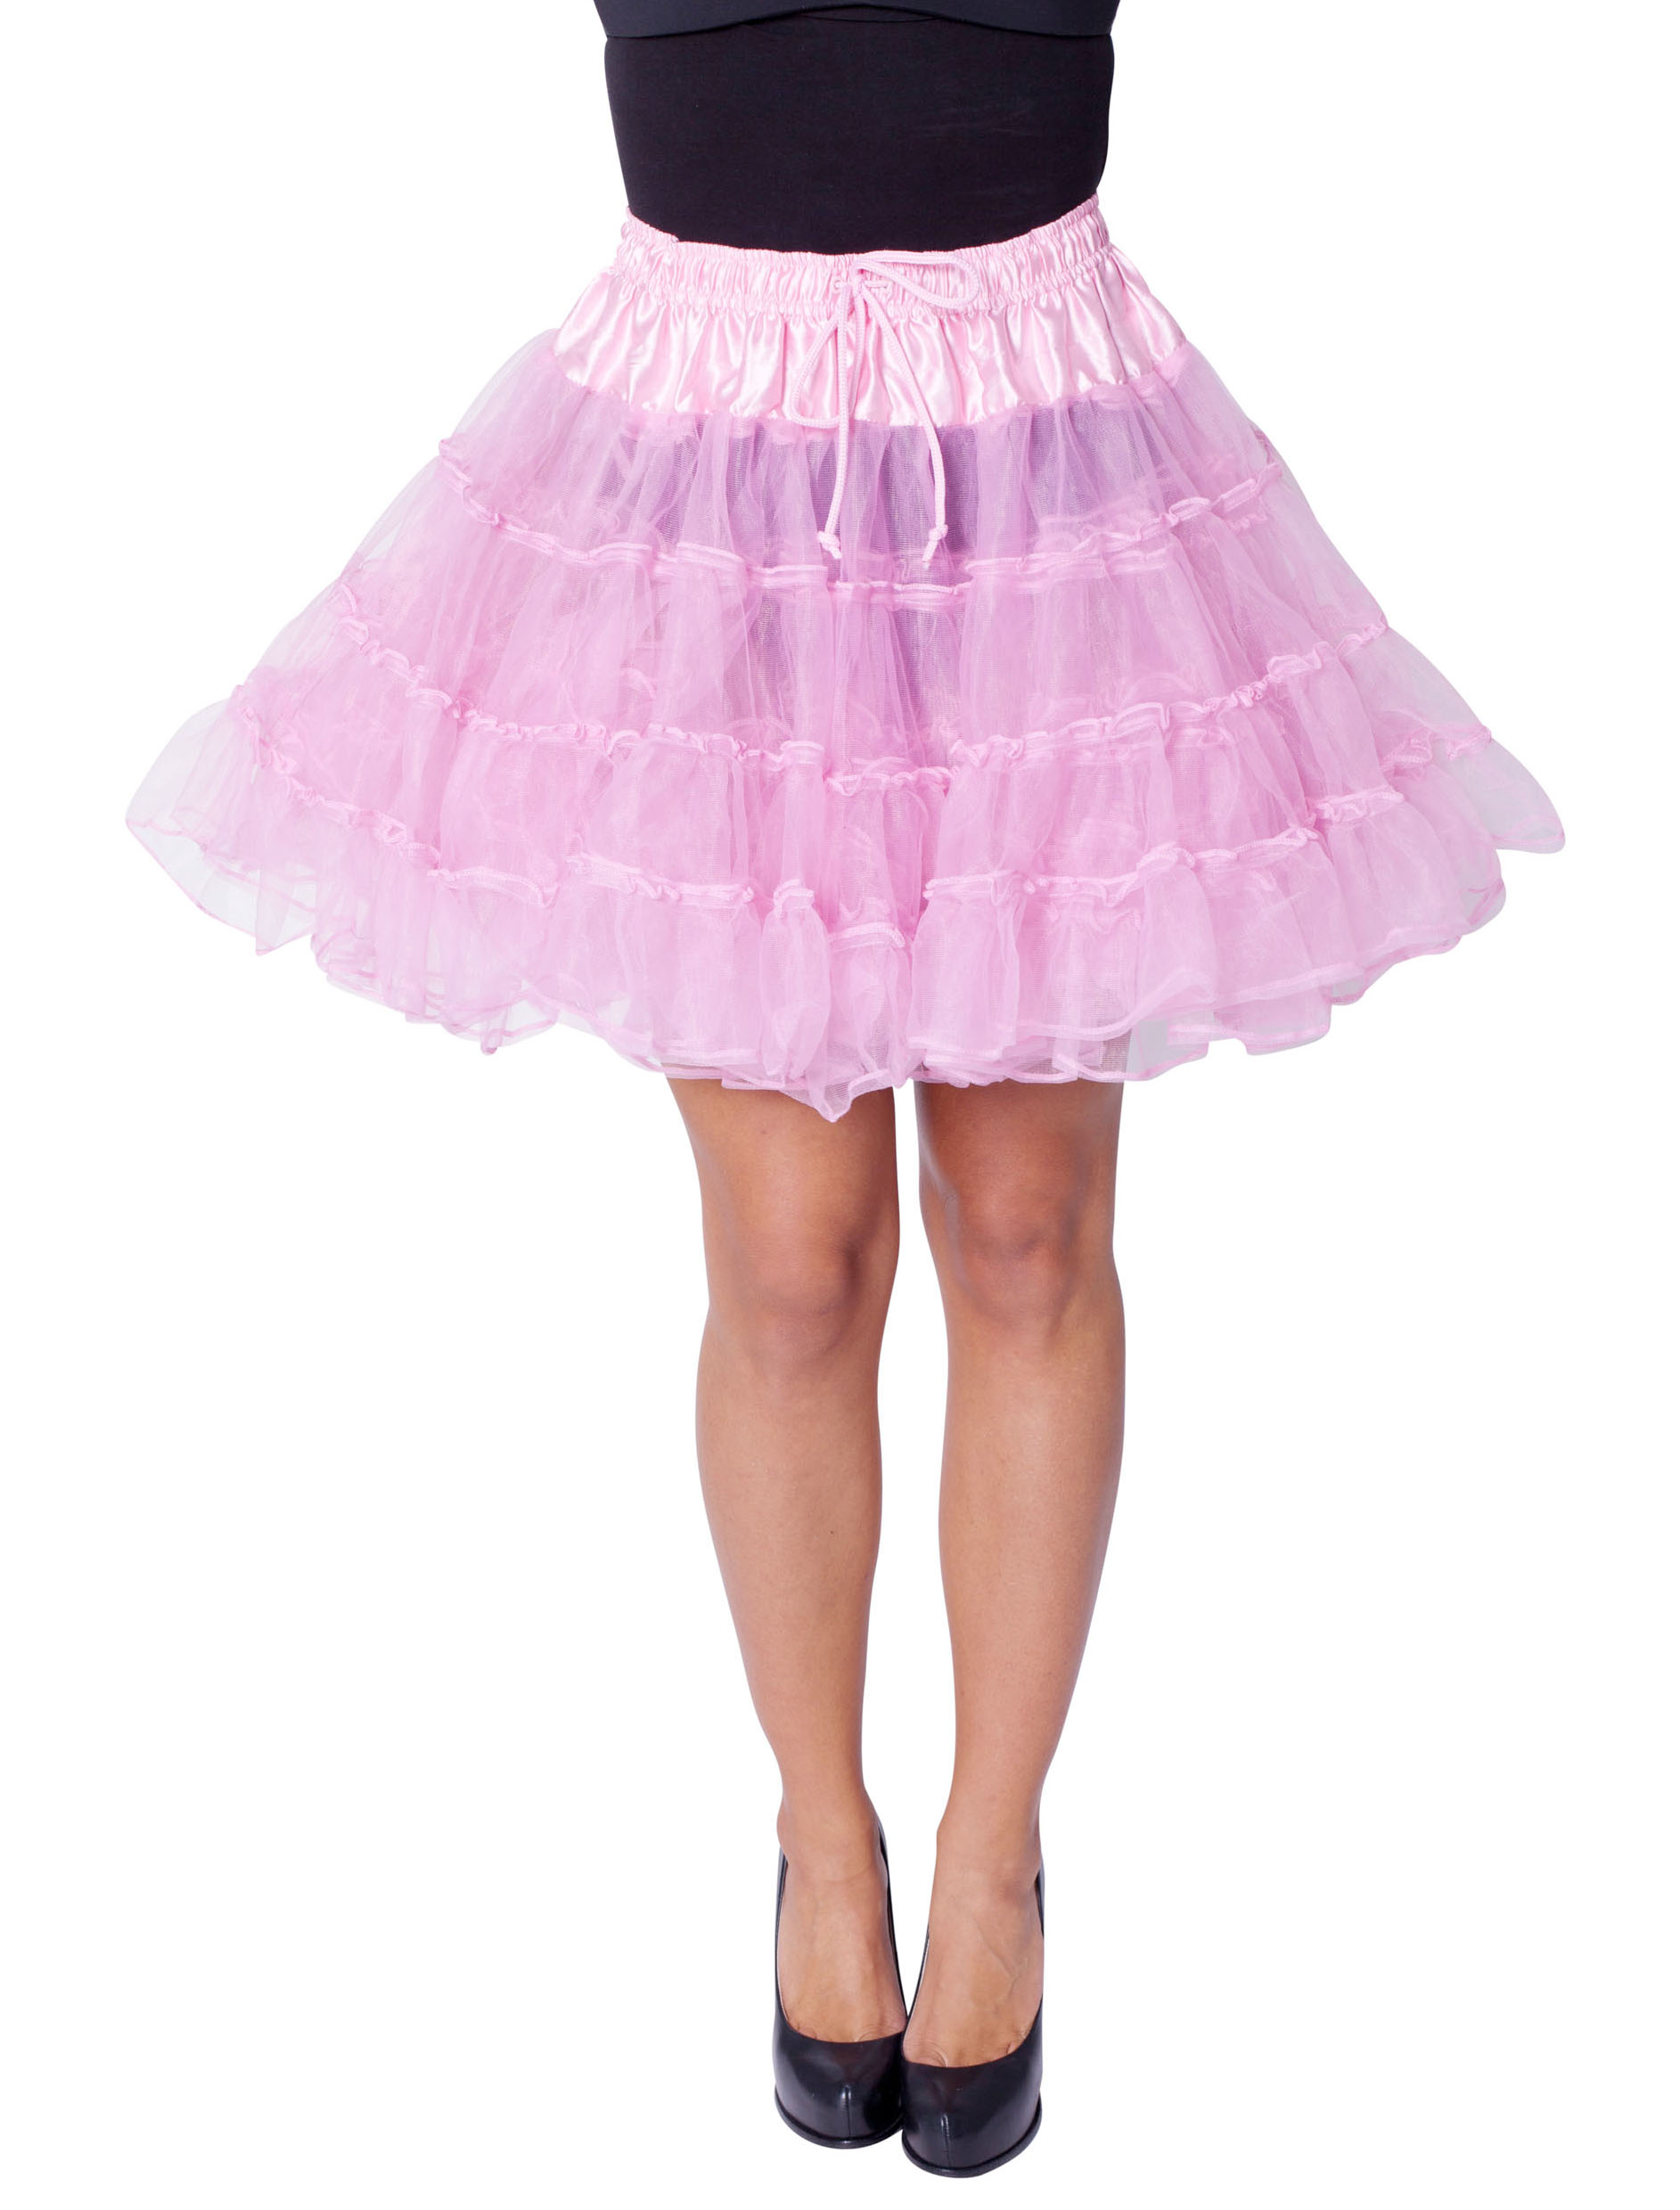 Petticoat de luxe rosa one size